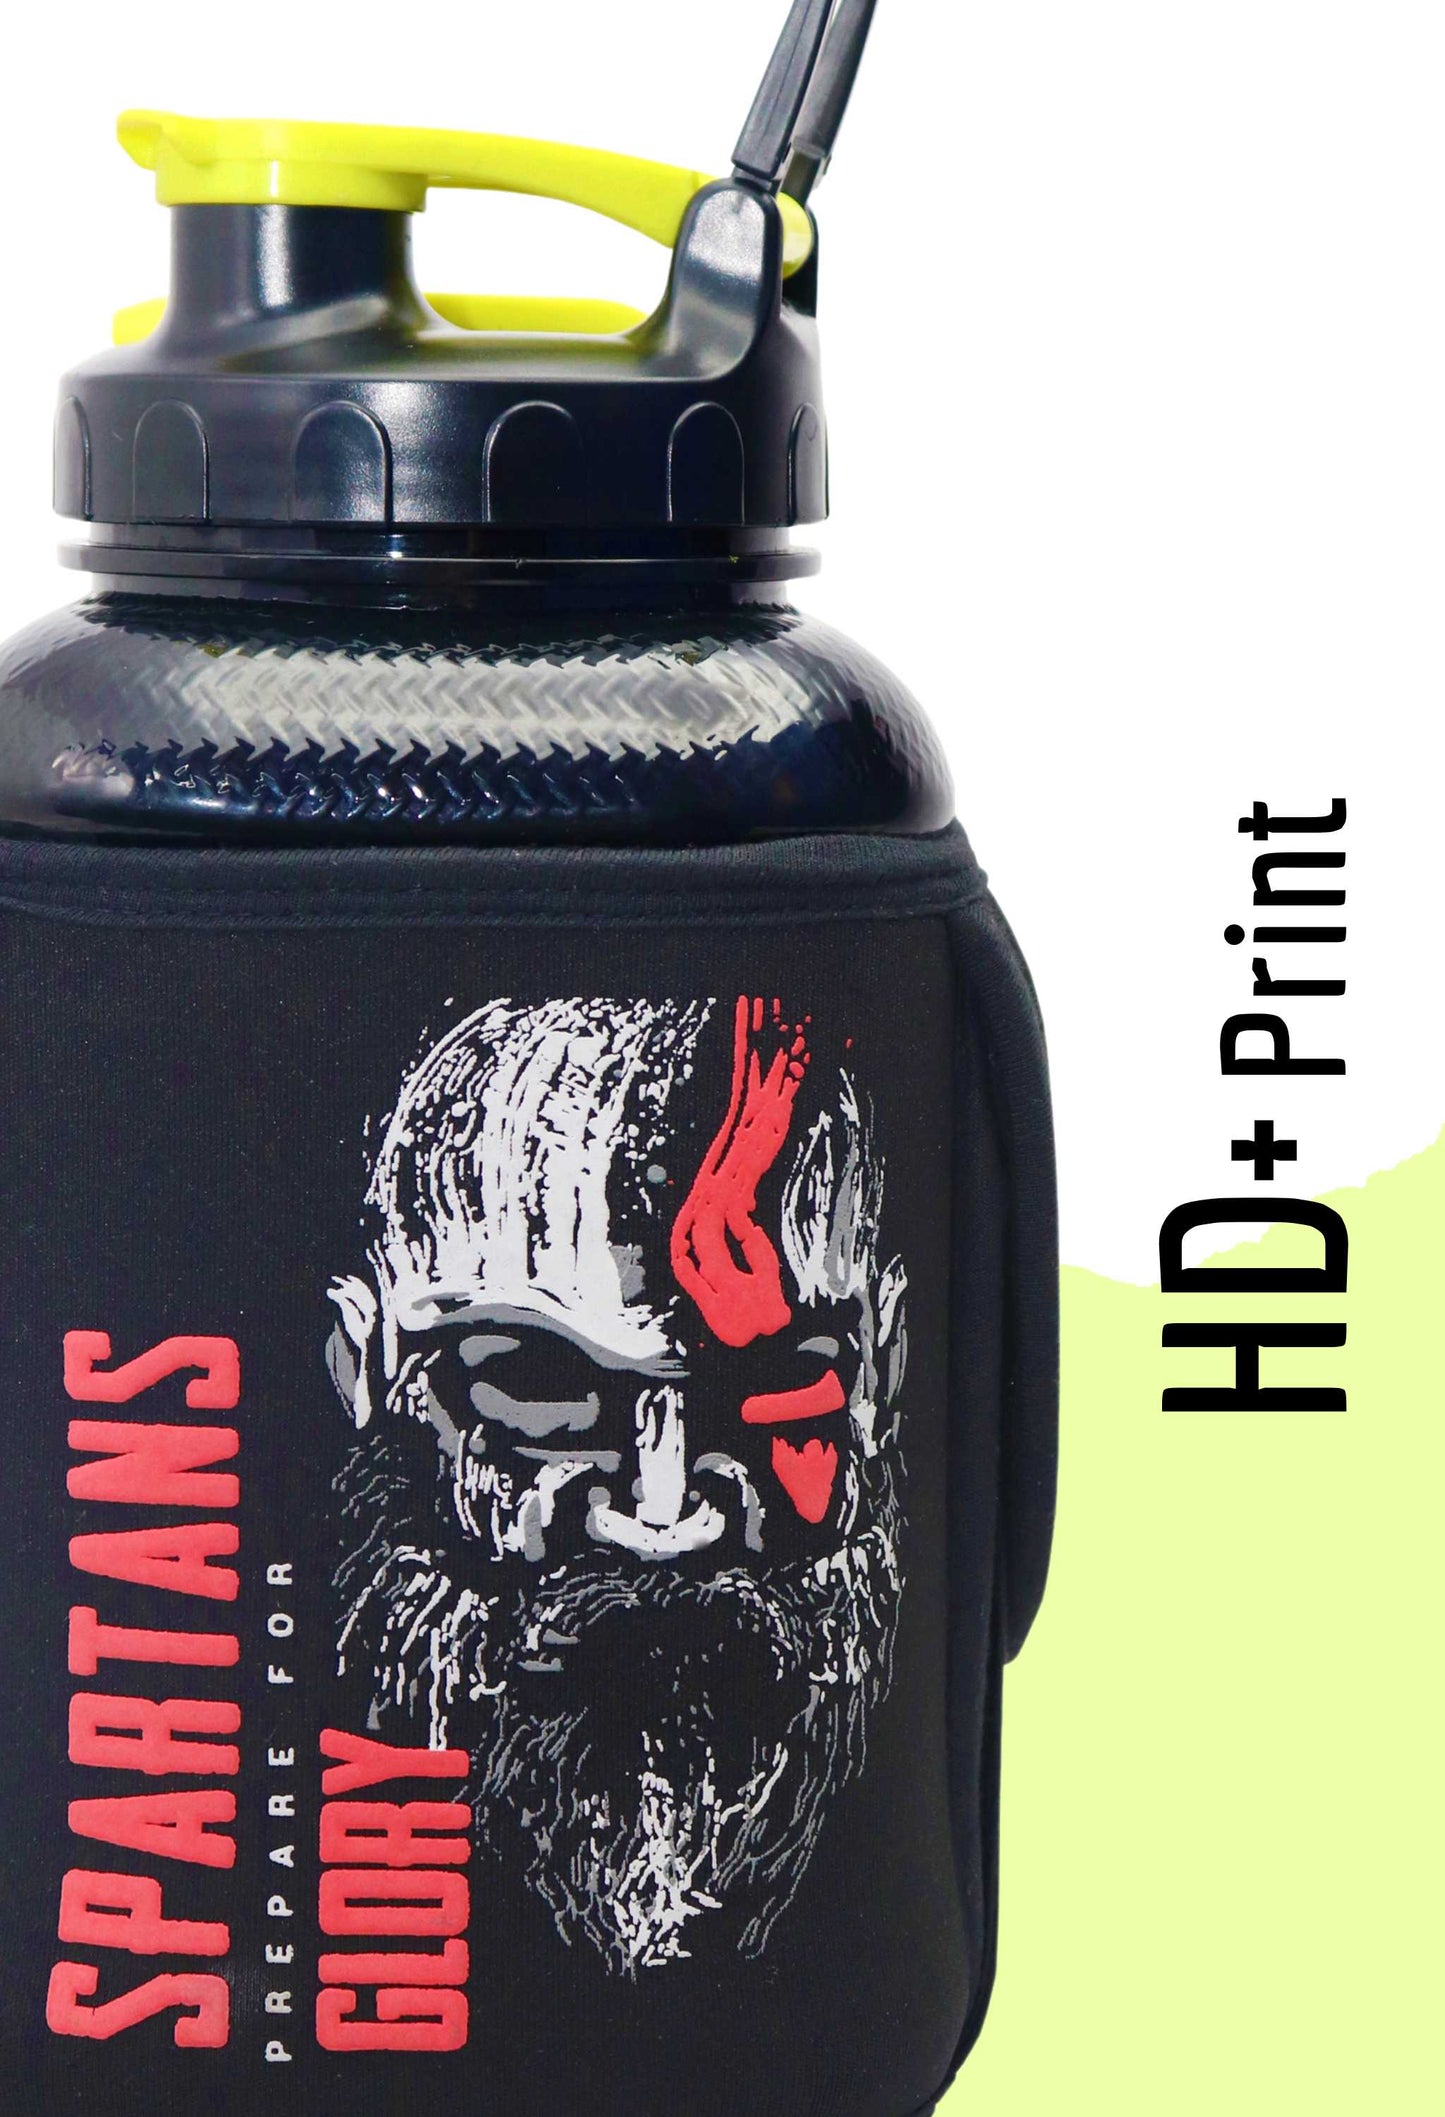 Spartans Prepare For Glory - Monster Gallon Gym Bottle 2.2L Strong Soul Gym Bottle